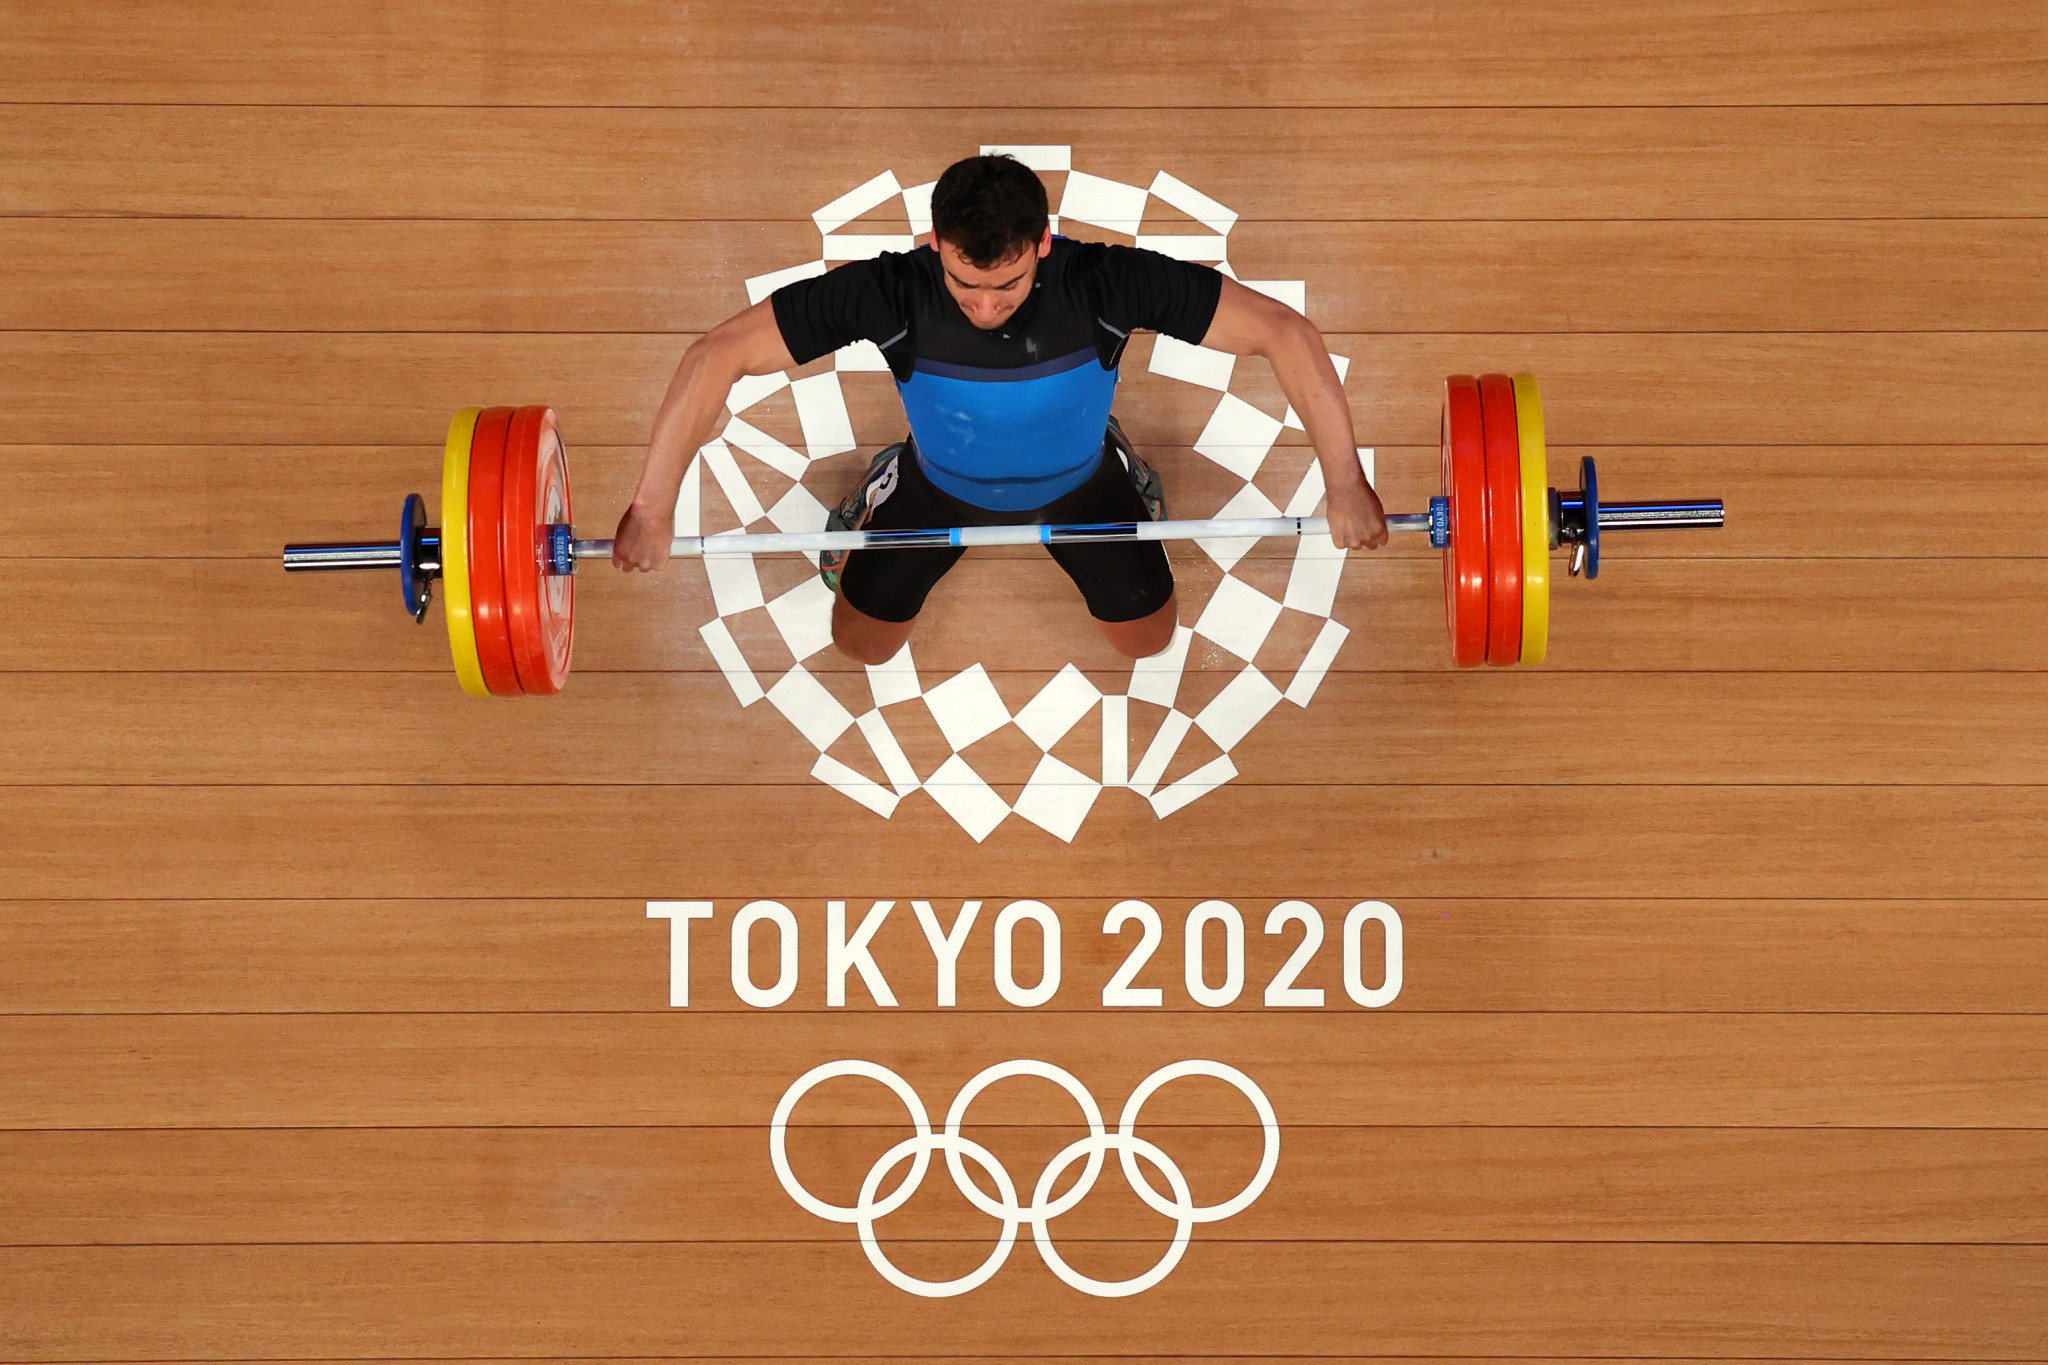 Ceremony held at Nationwide Stadium to rejoice Tokyo 2020 Olympics anniversary